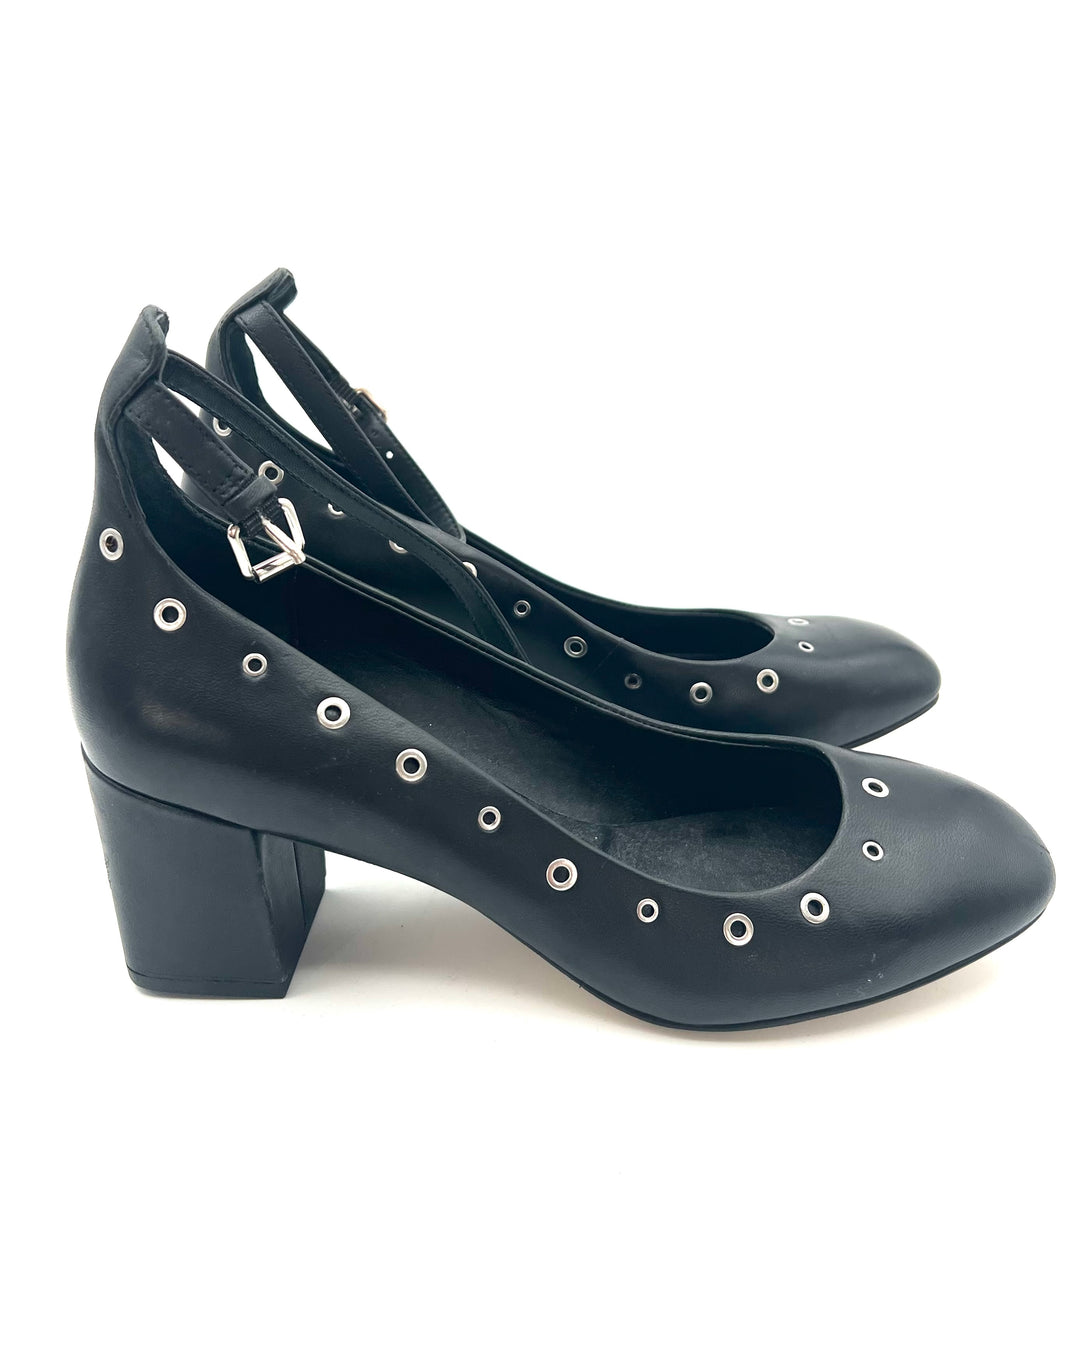 Black Grommet Strap Heels - Size 7